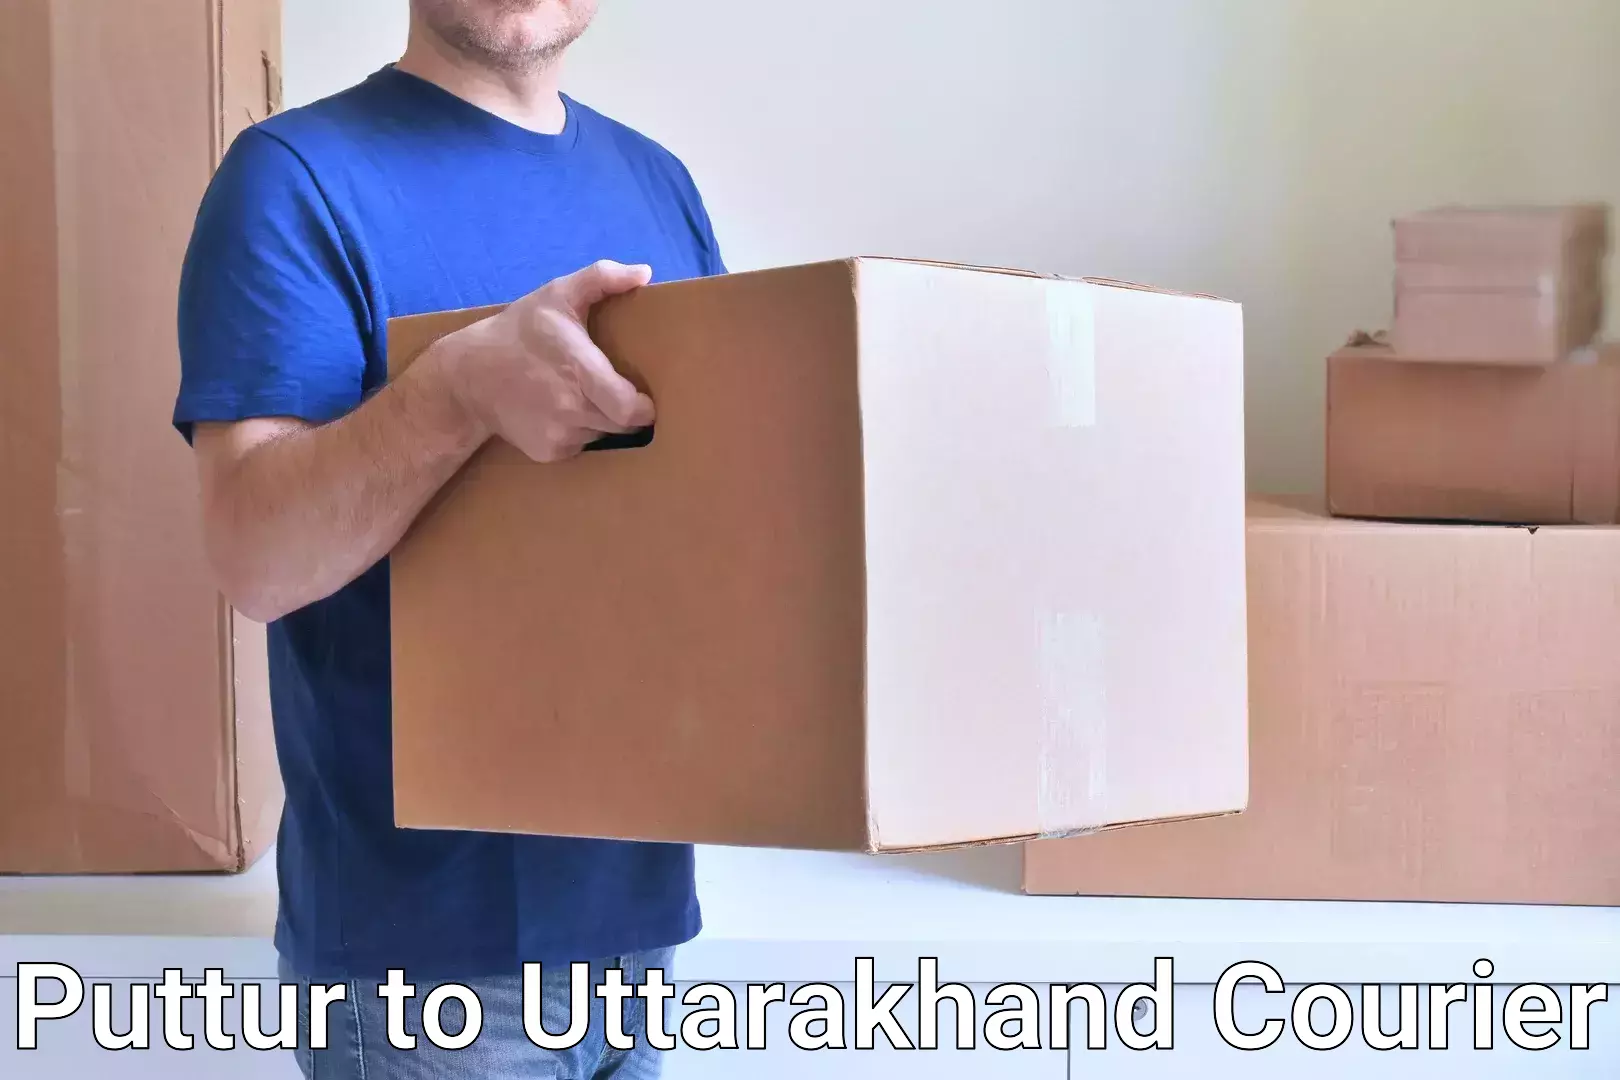 Courier service innovation Puttur to Rudraprayag